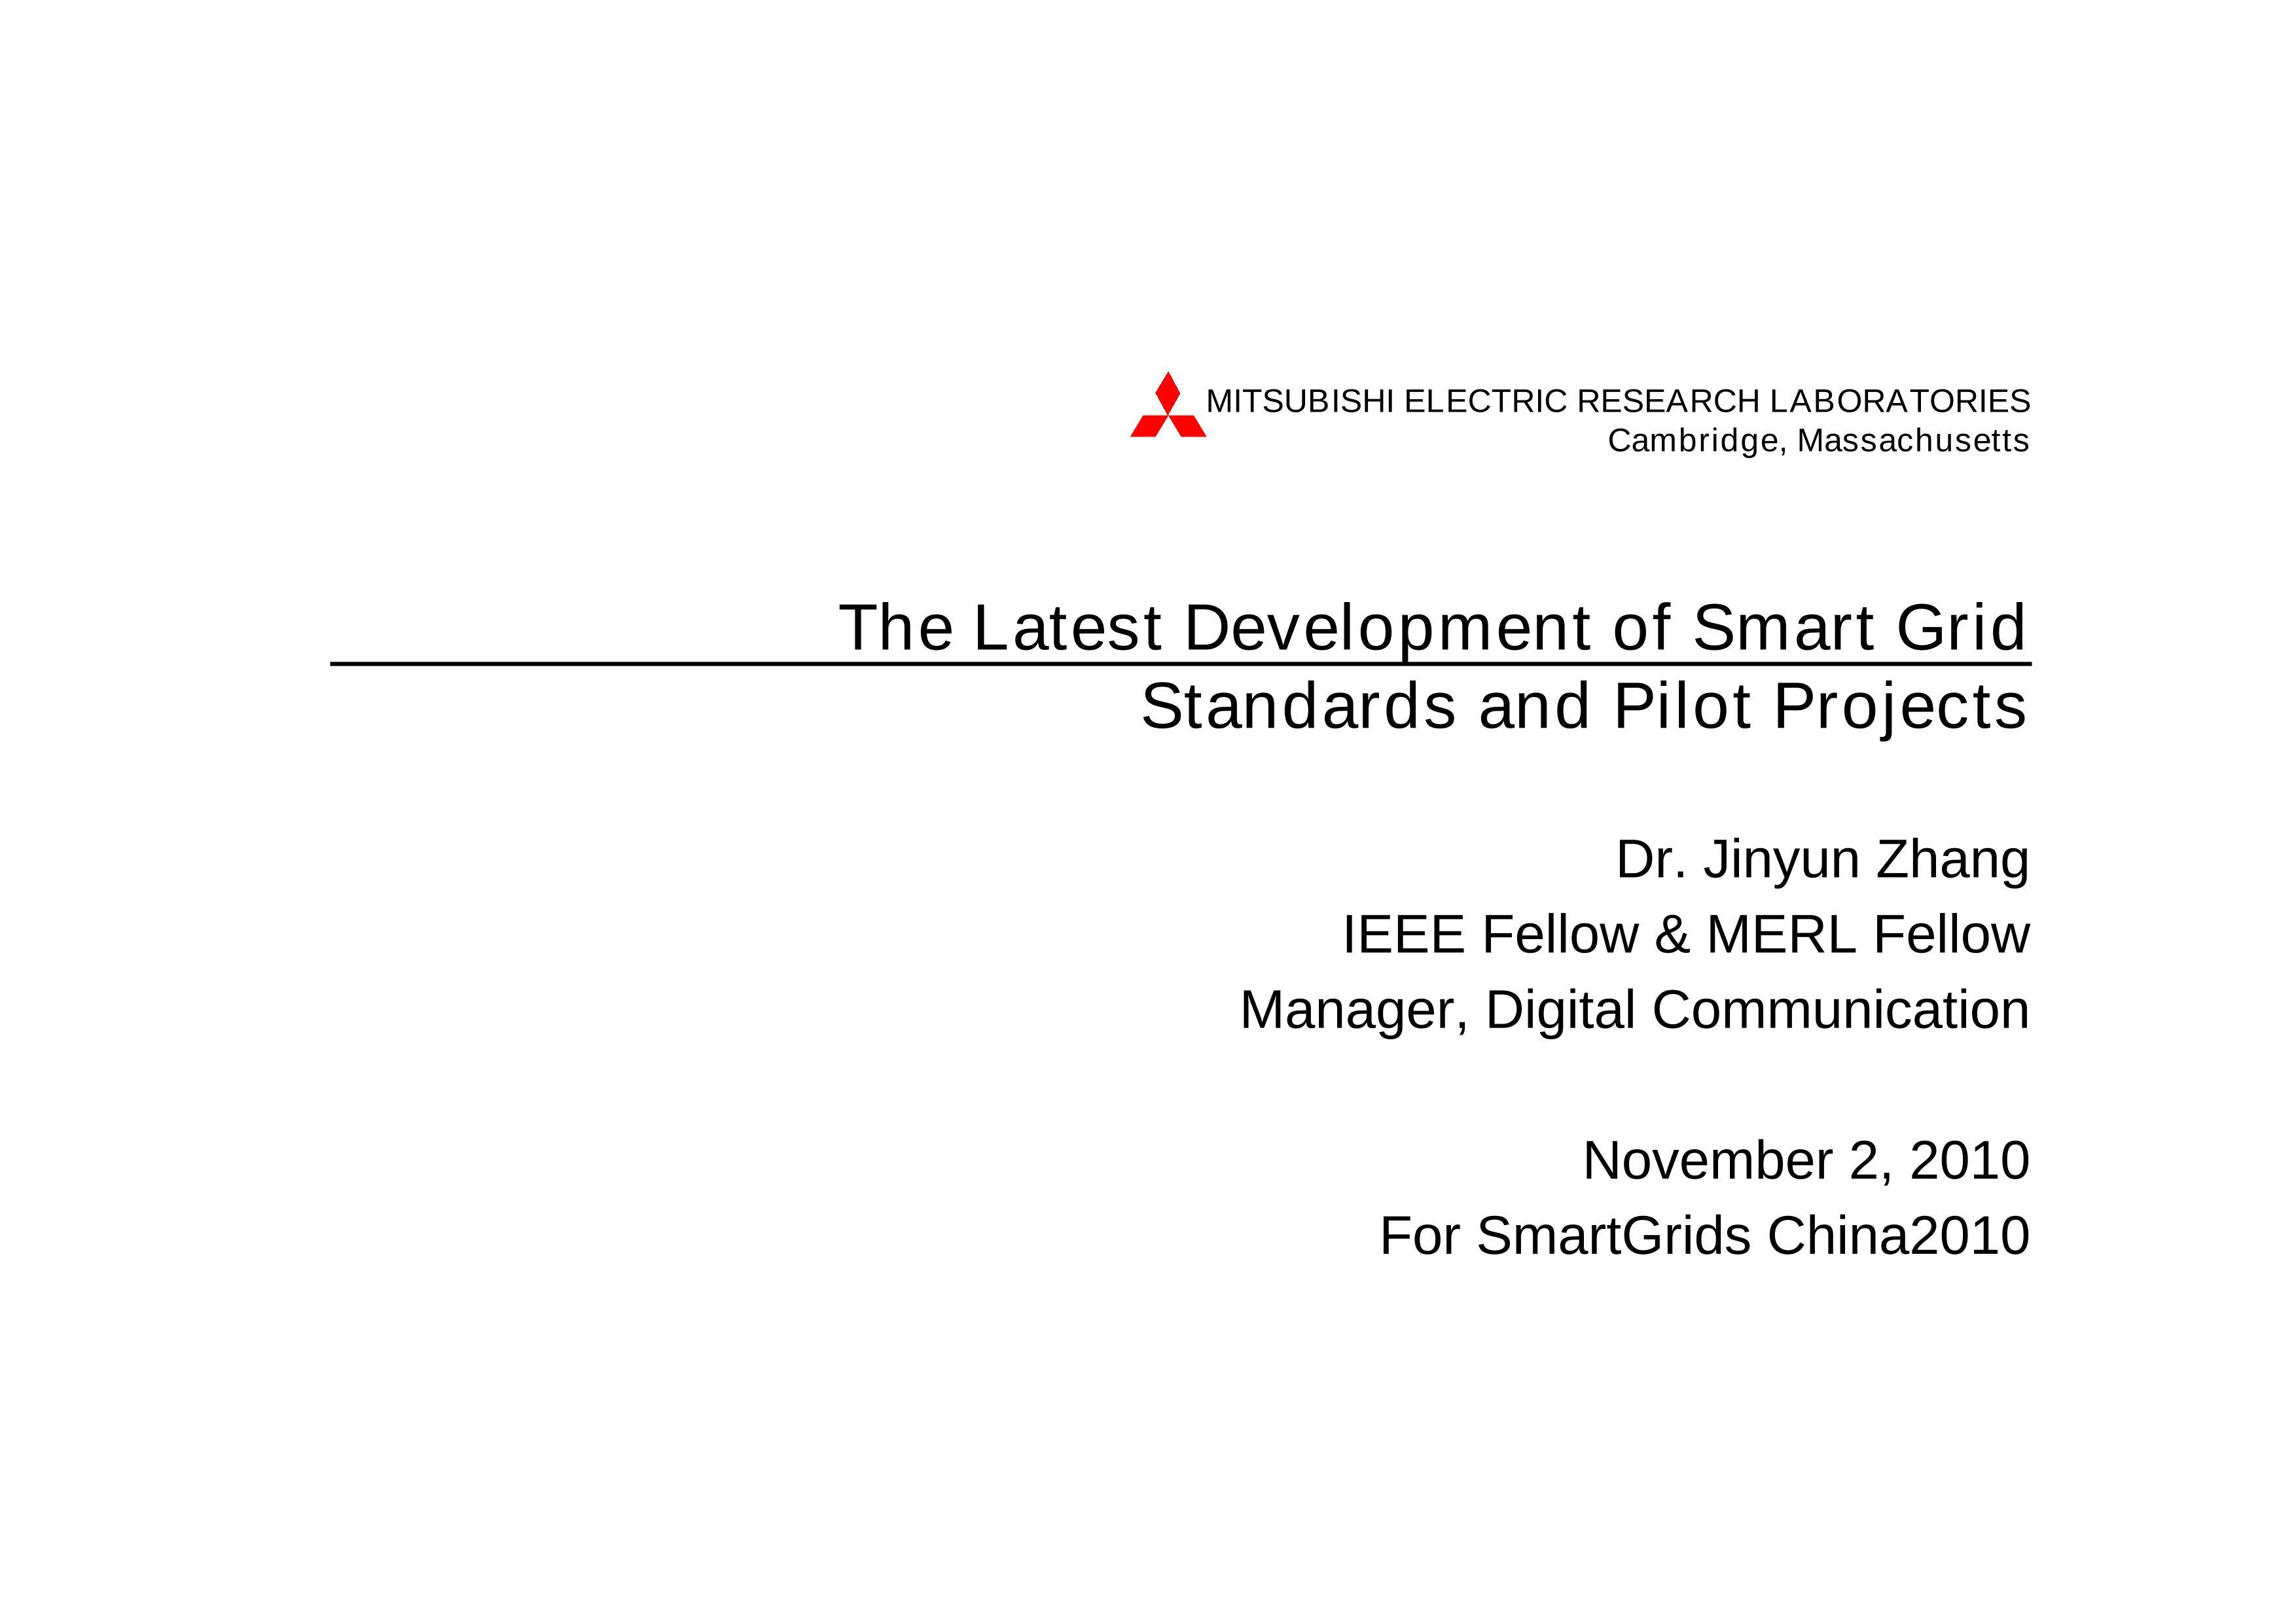 The Latest Development of Smart Grid Standards and Pilot ProjectsDr. Jinyun ZhangFor SmartGrids China2010 .pdf1ҳ